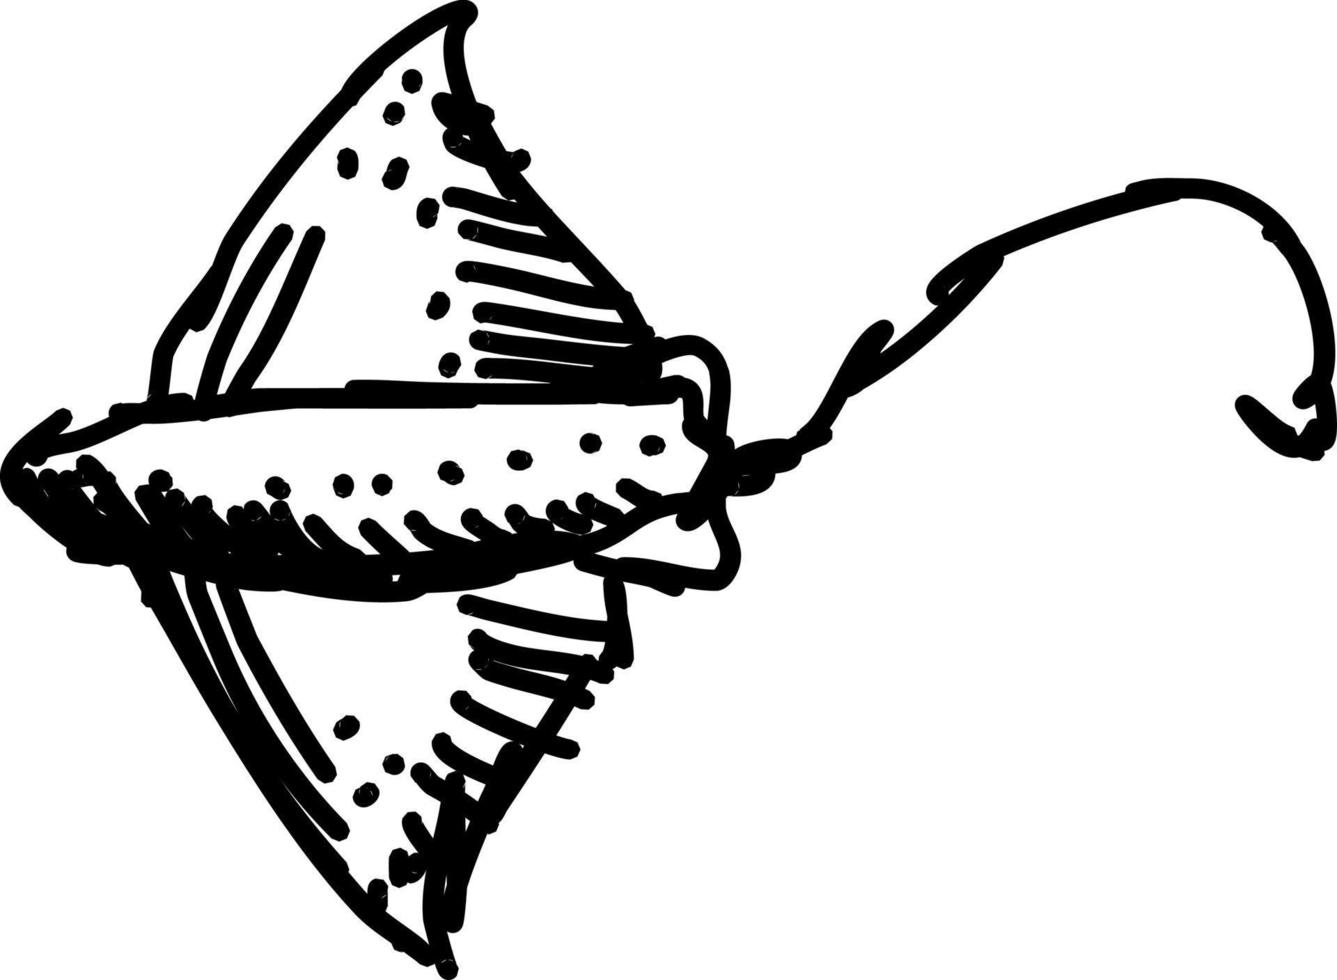 fisk skiss, illustration, vektor på vit bakgrund.